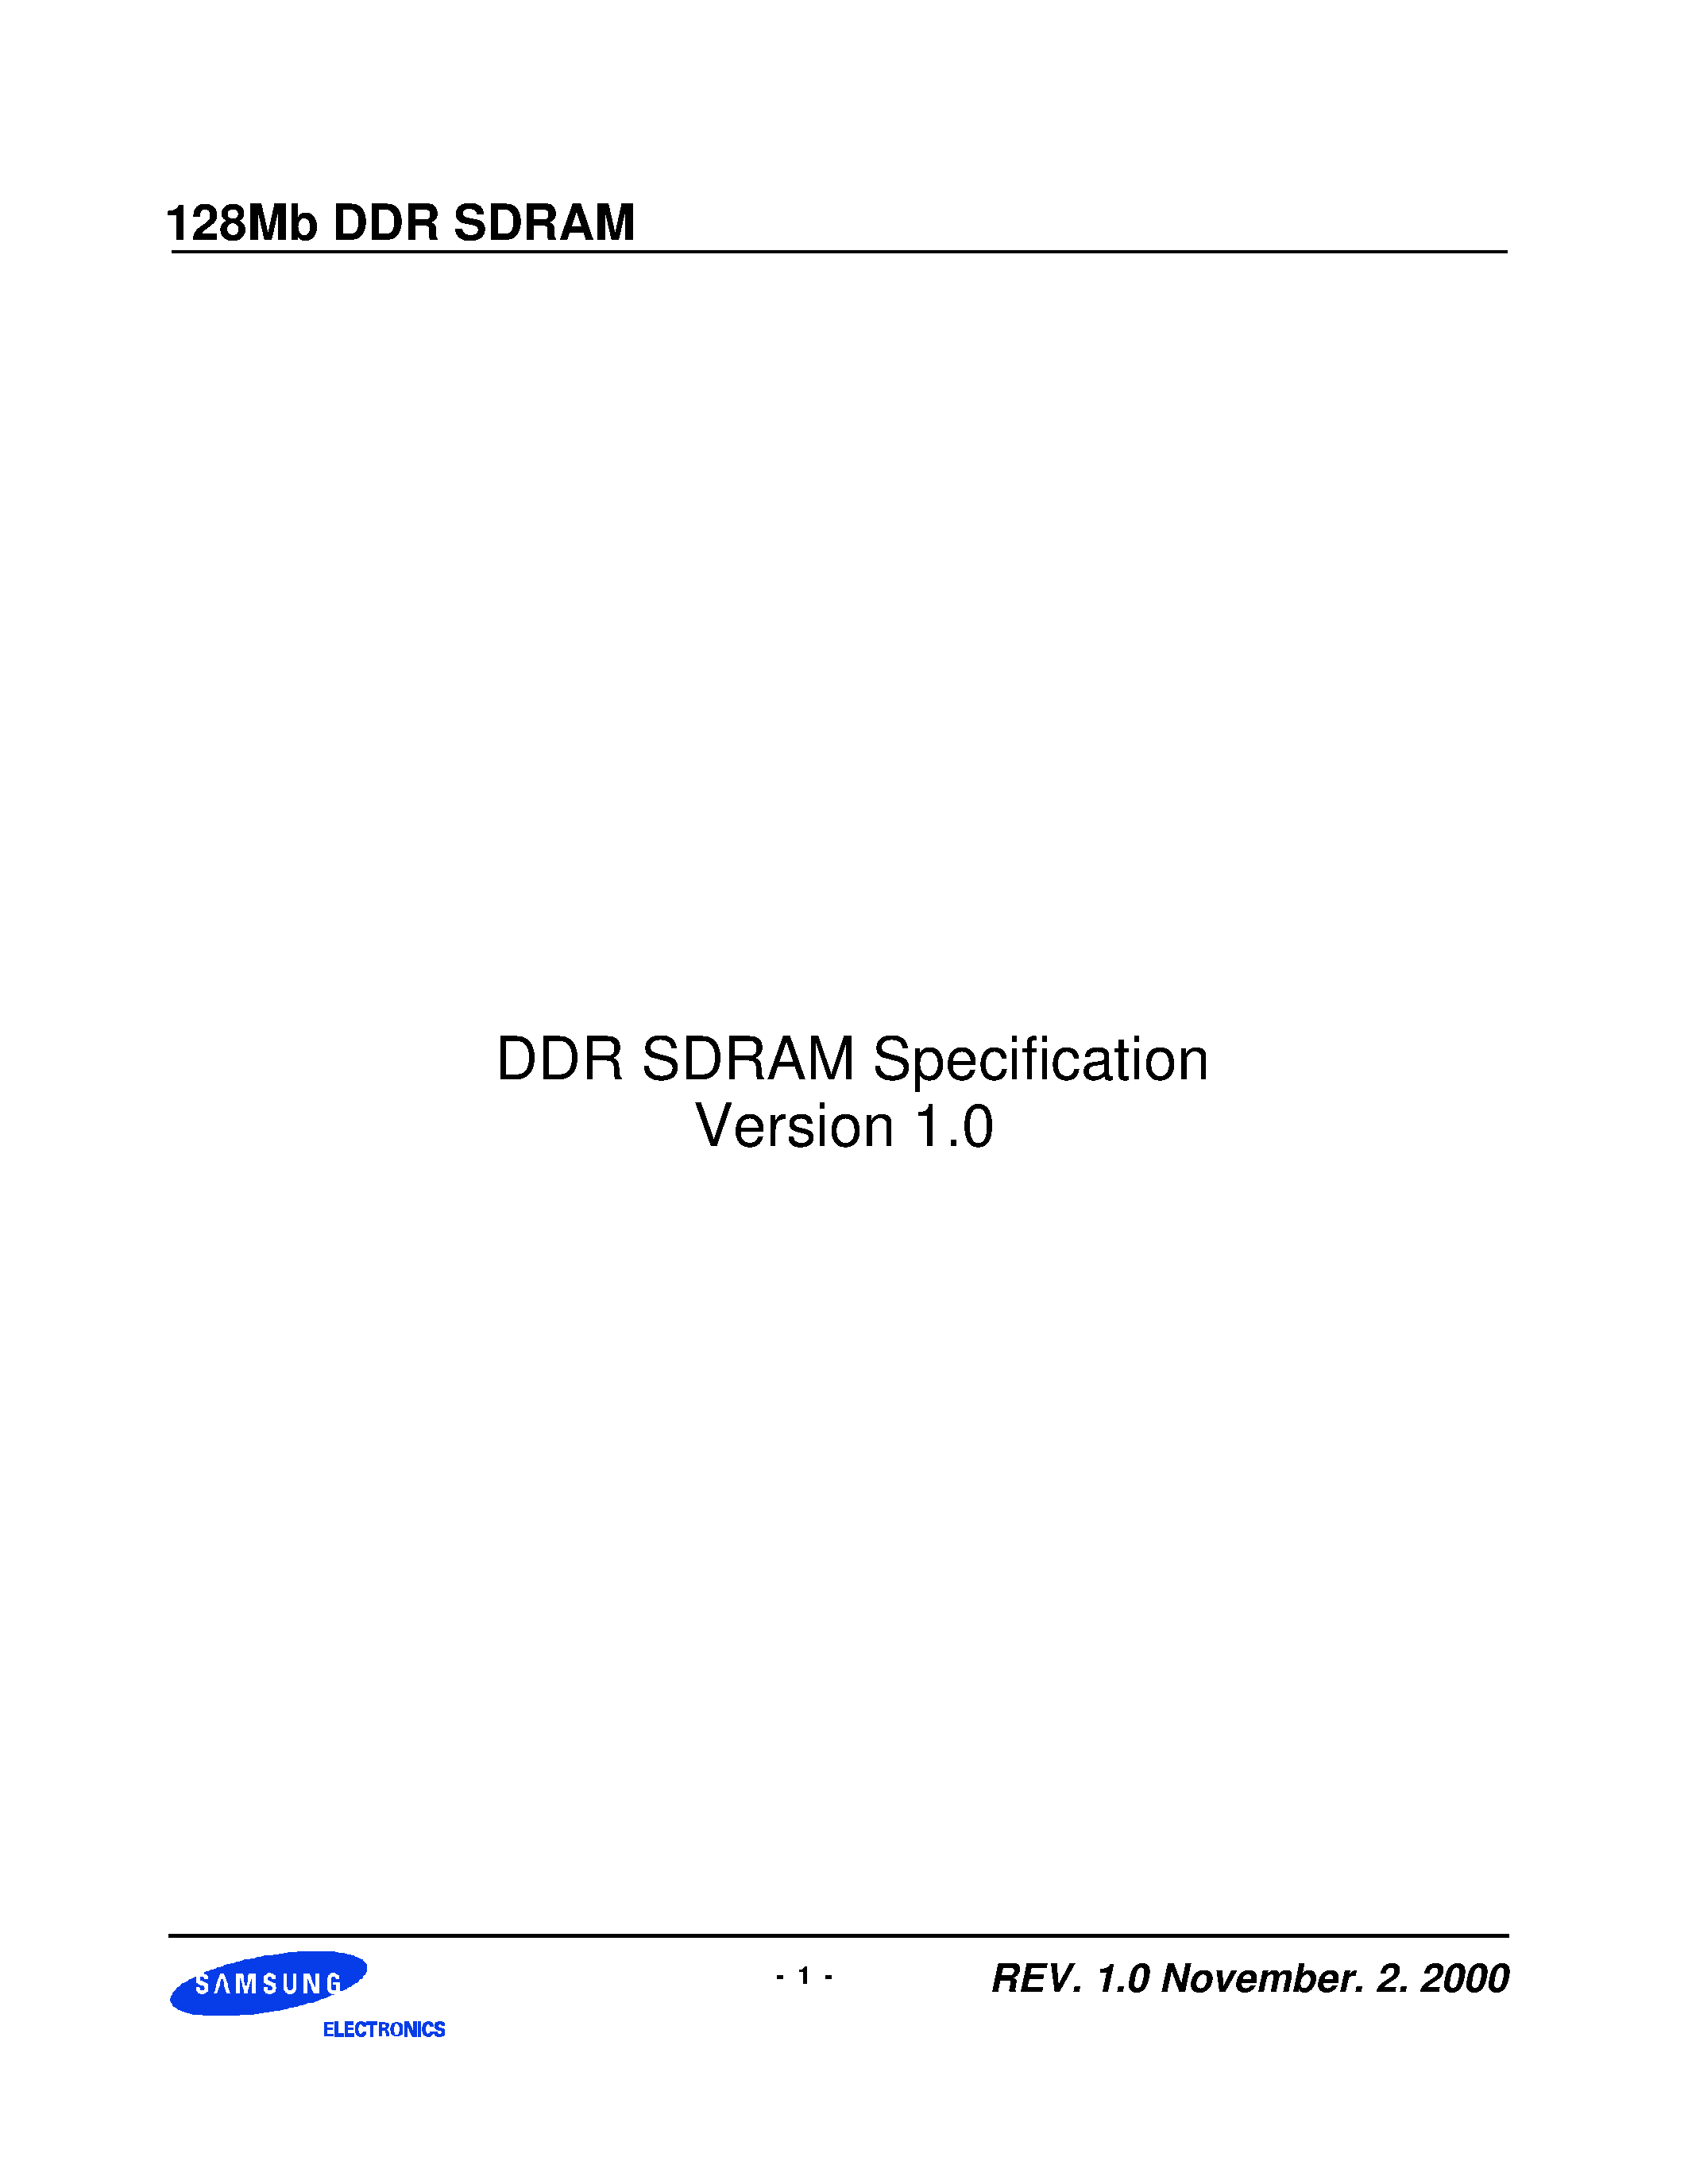 Datasheet K4H280438F - 128Mb F-die DDR SDRAM Specification page 1